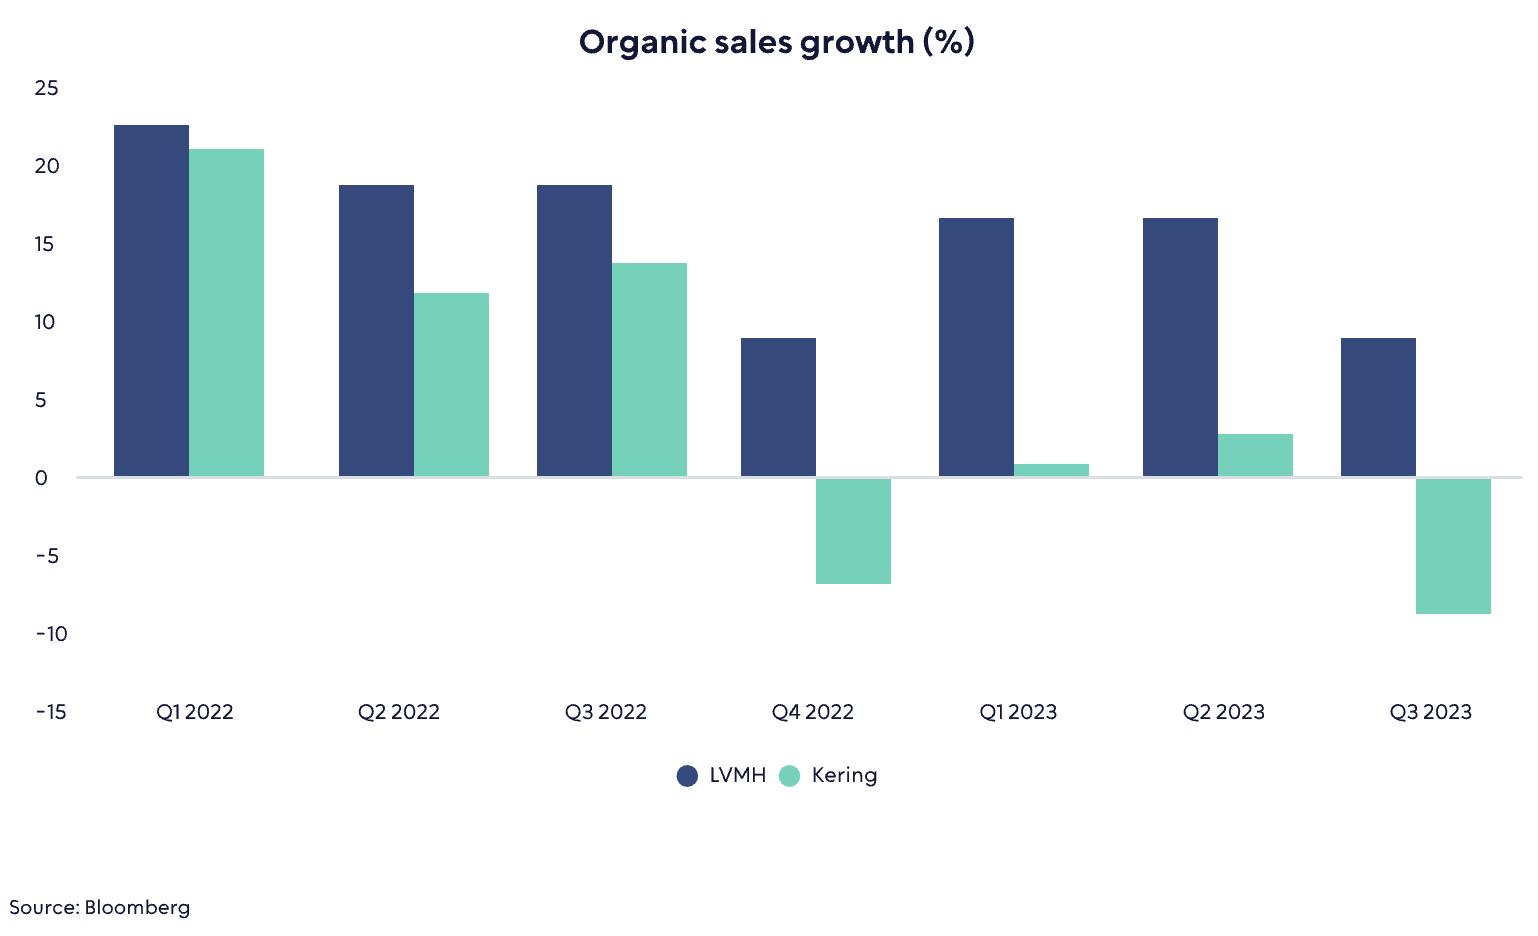 LUX ETF LVMH v Kering Organic Sales Growth